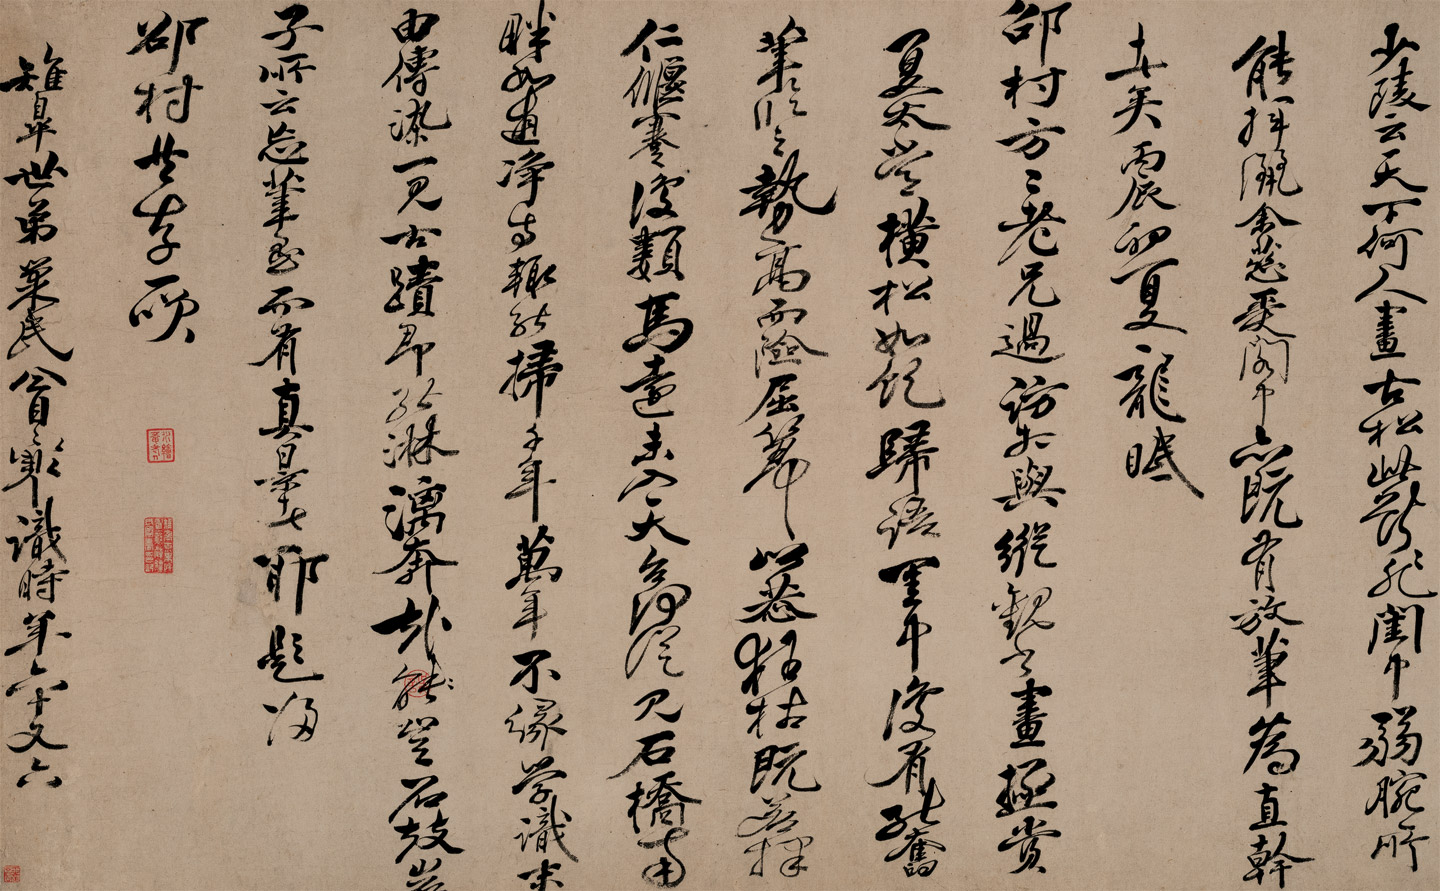 Inscription by Mao Xiang